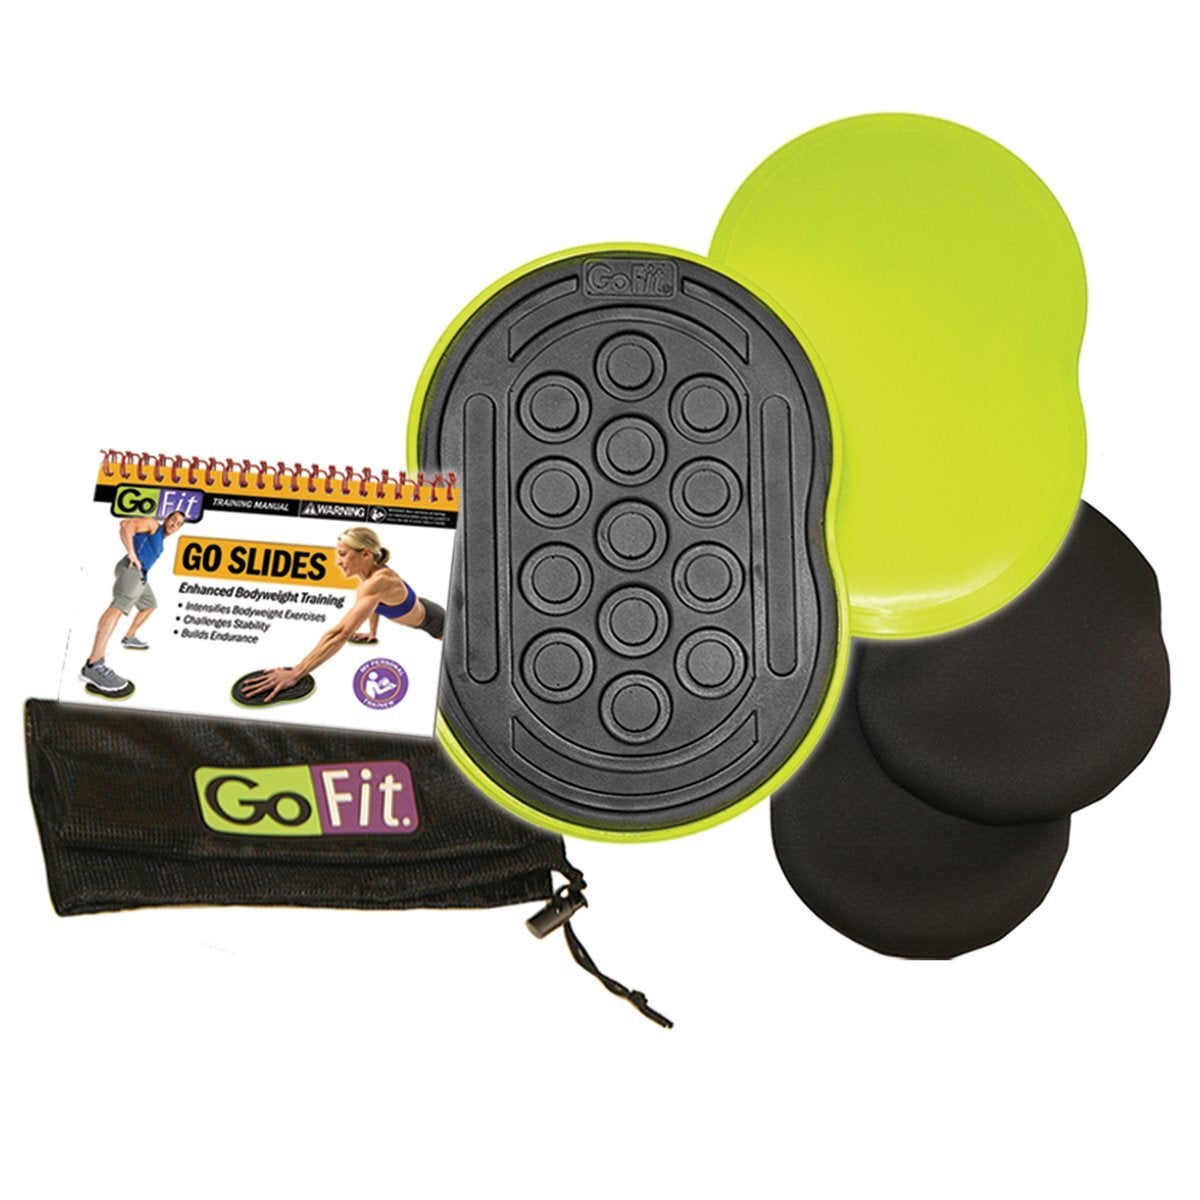 2pc GoFit 30.5cm Go Slides Fitness Gym Arm/Leg Workout Exercise Training Sliders